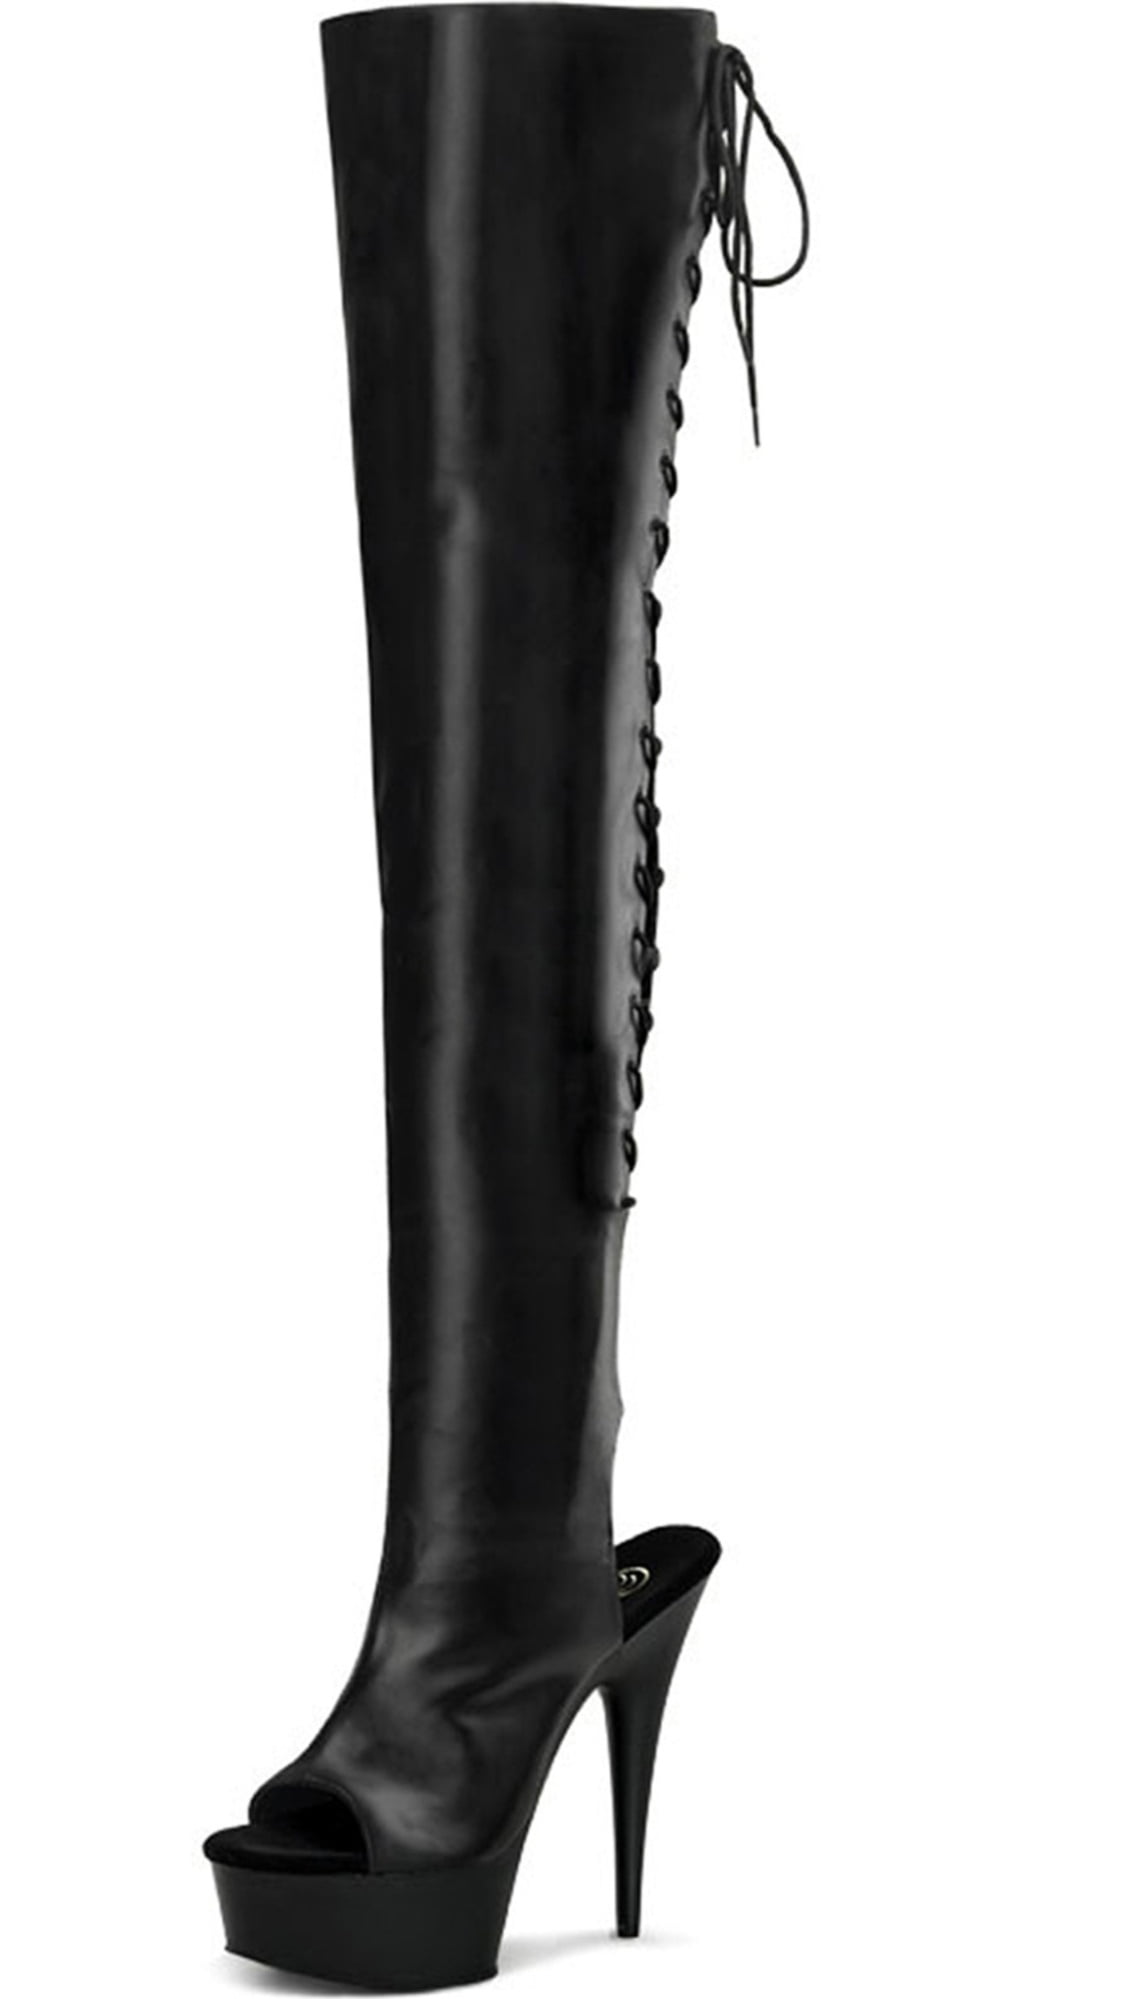 black thigh high boots 3 inch heel